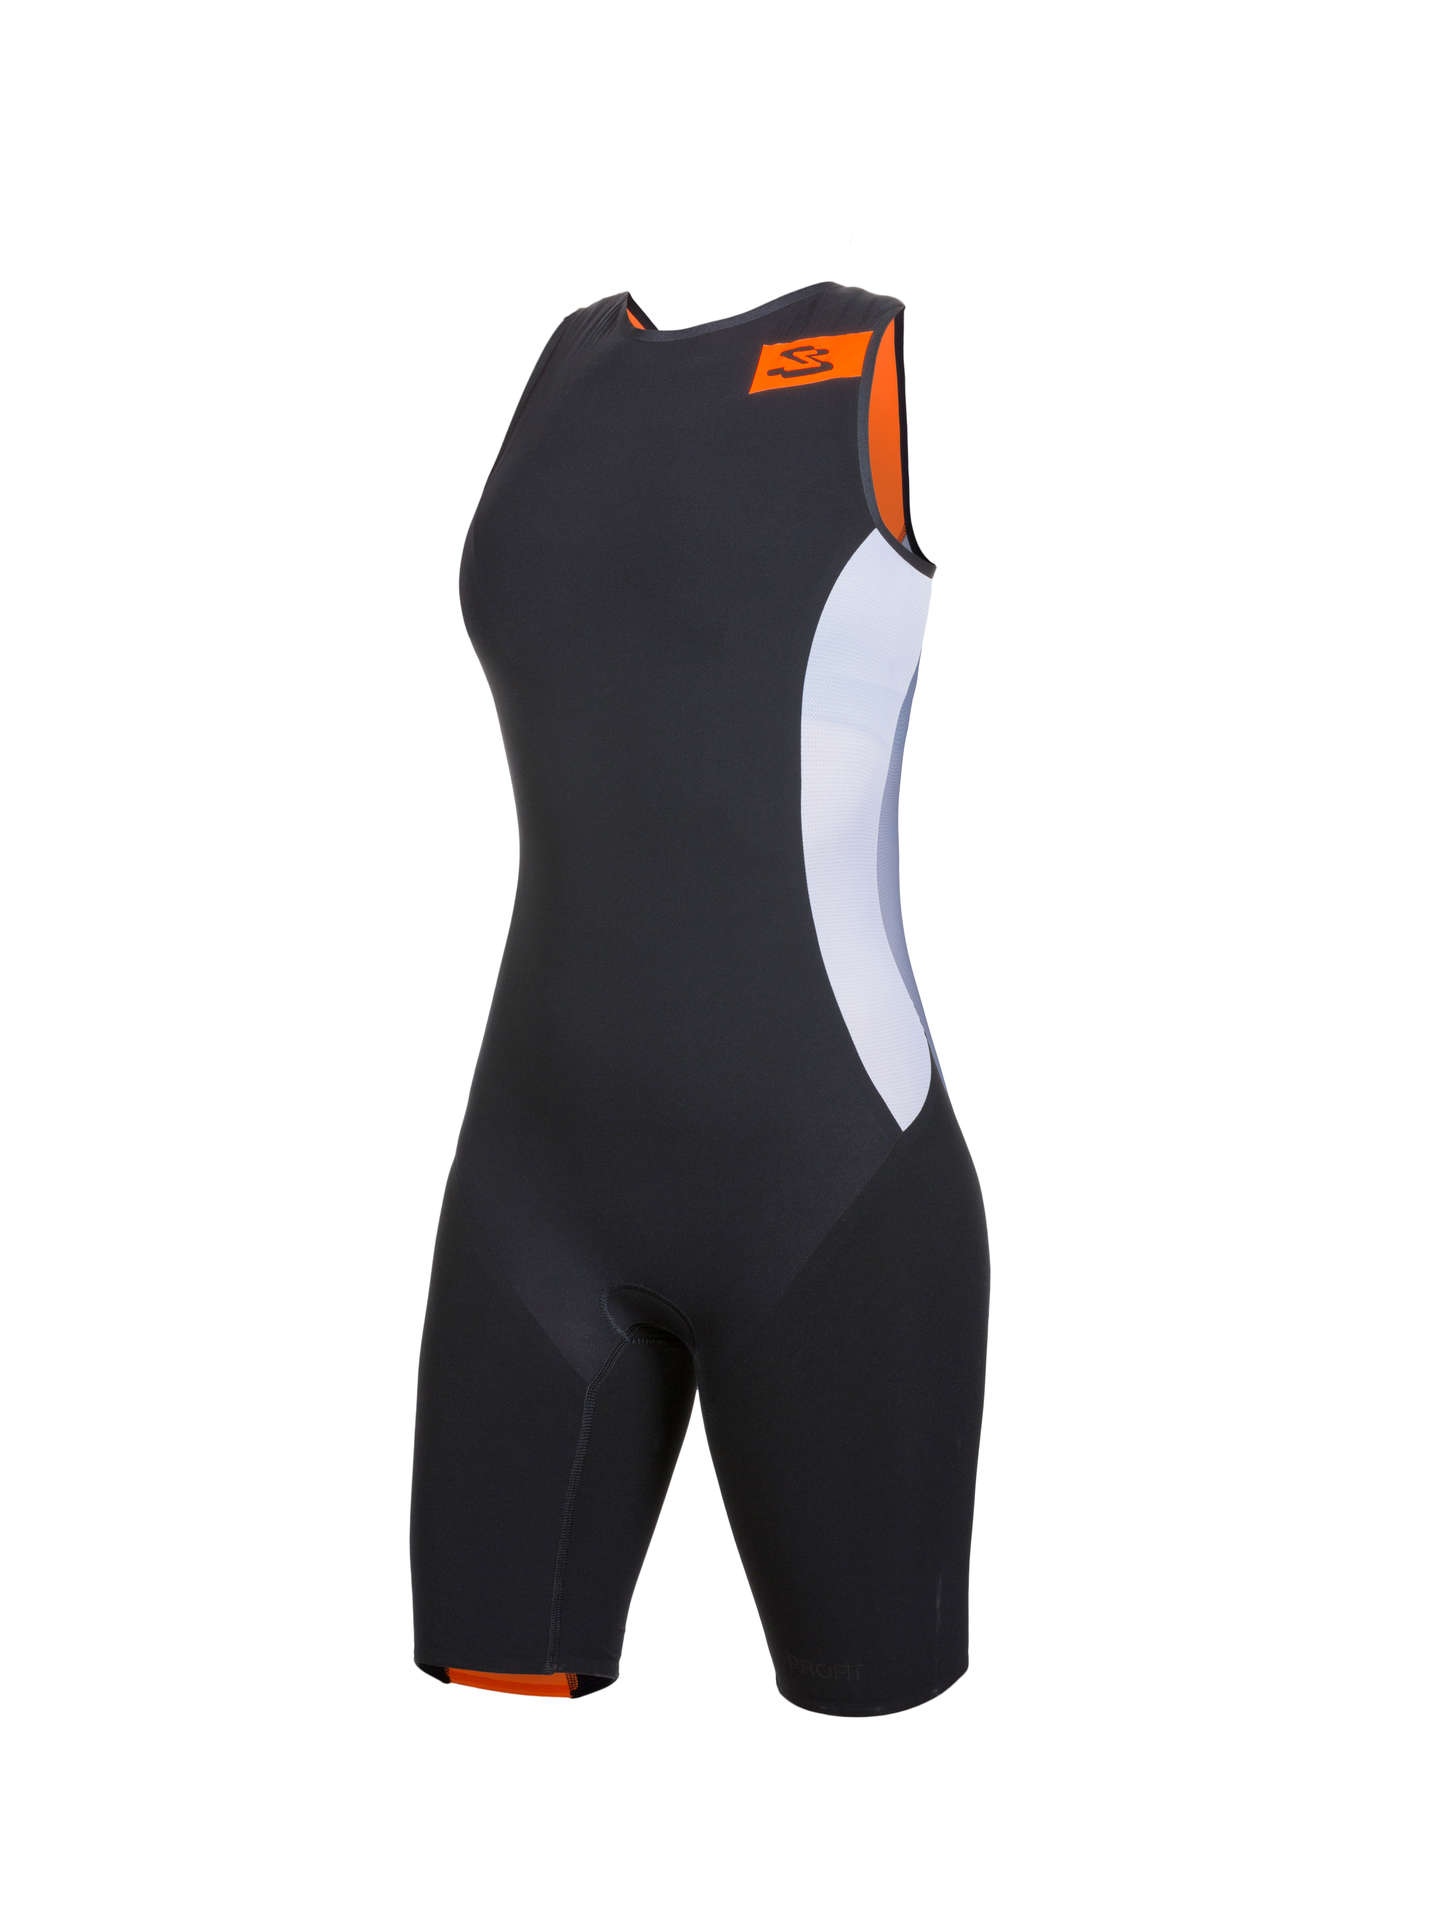 Spiuk Trisuit Sprint Zwart/Oranje High Visibility Dames